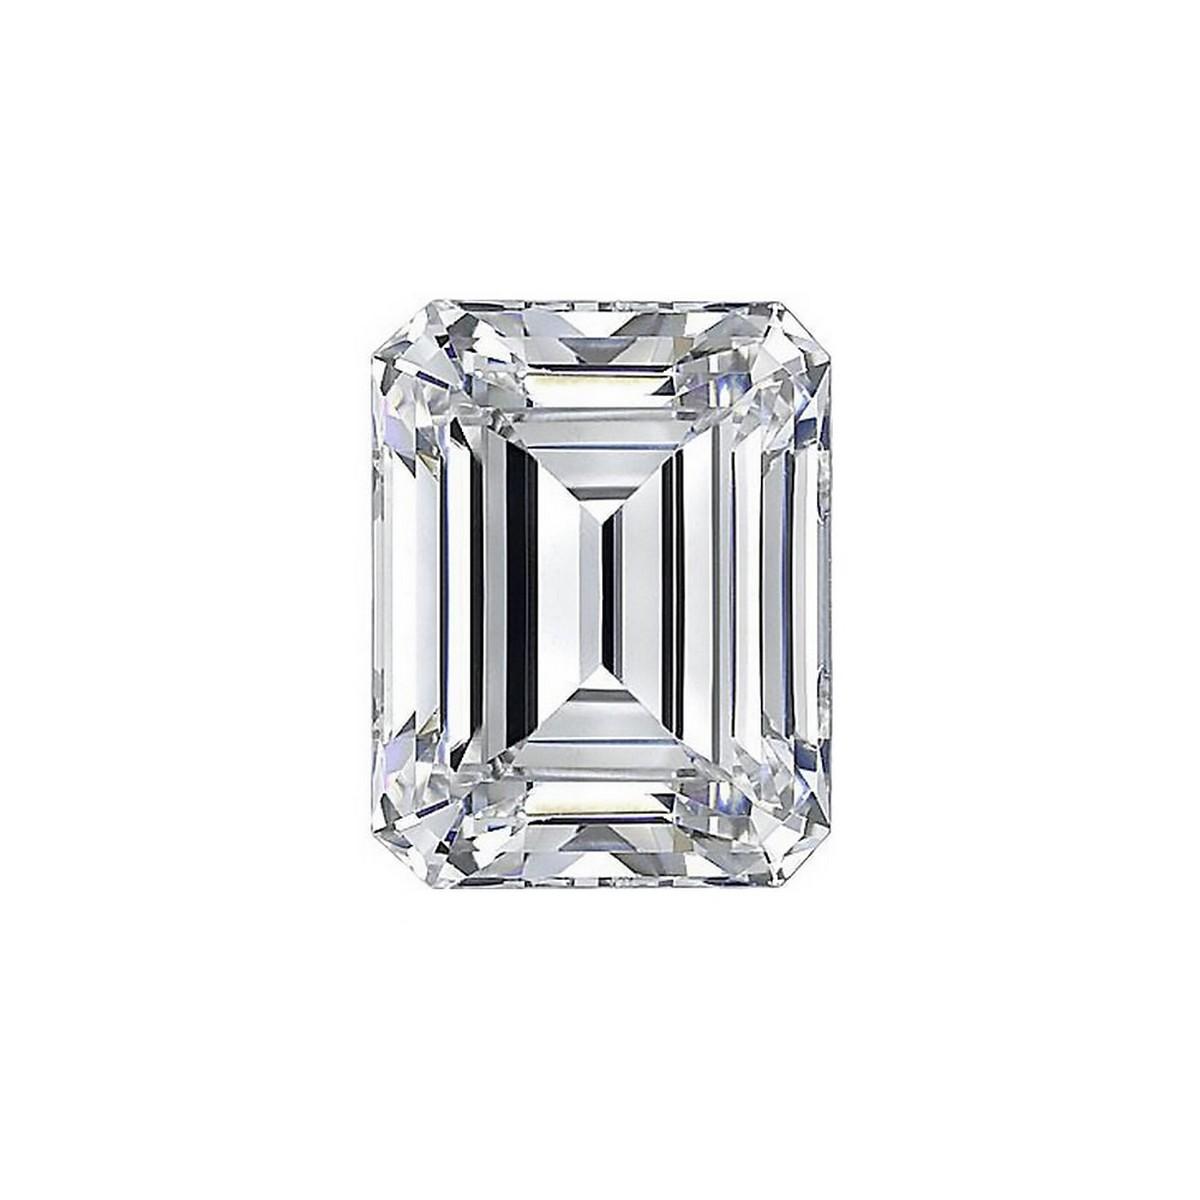 1.51 ctw. SI1 IGI Certified Emerald Cut Loose Diamond (LAB GROWN)